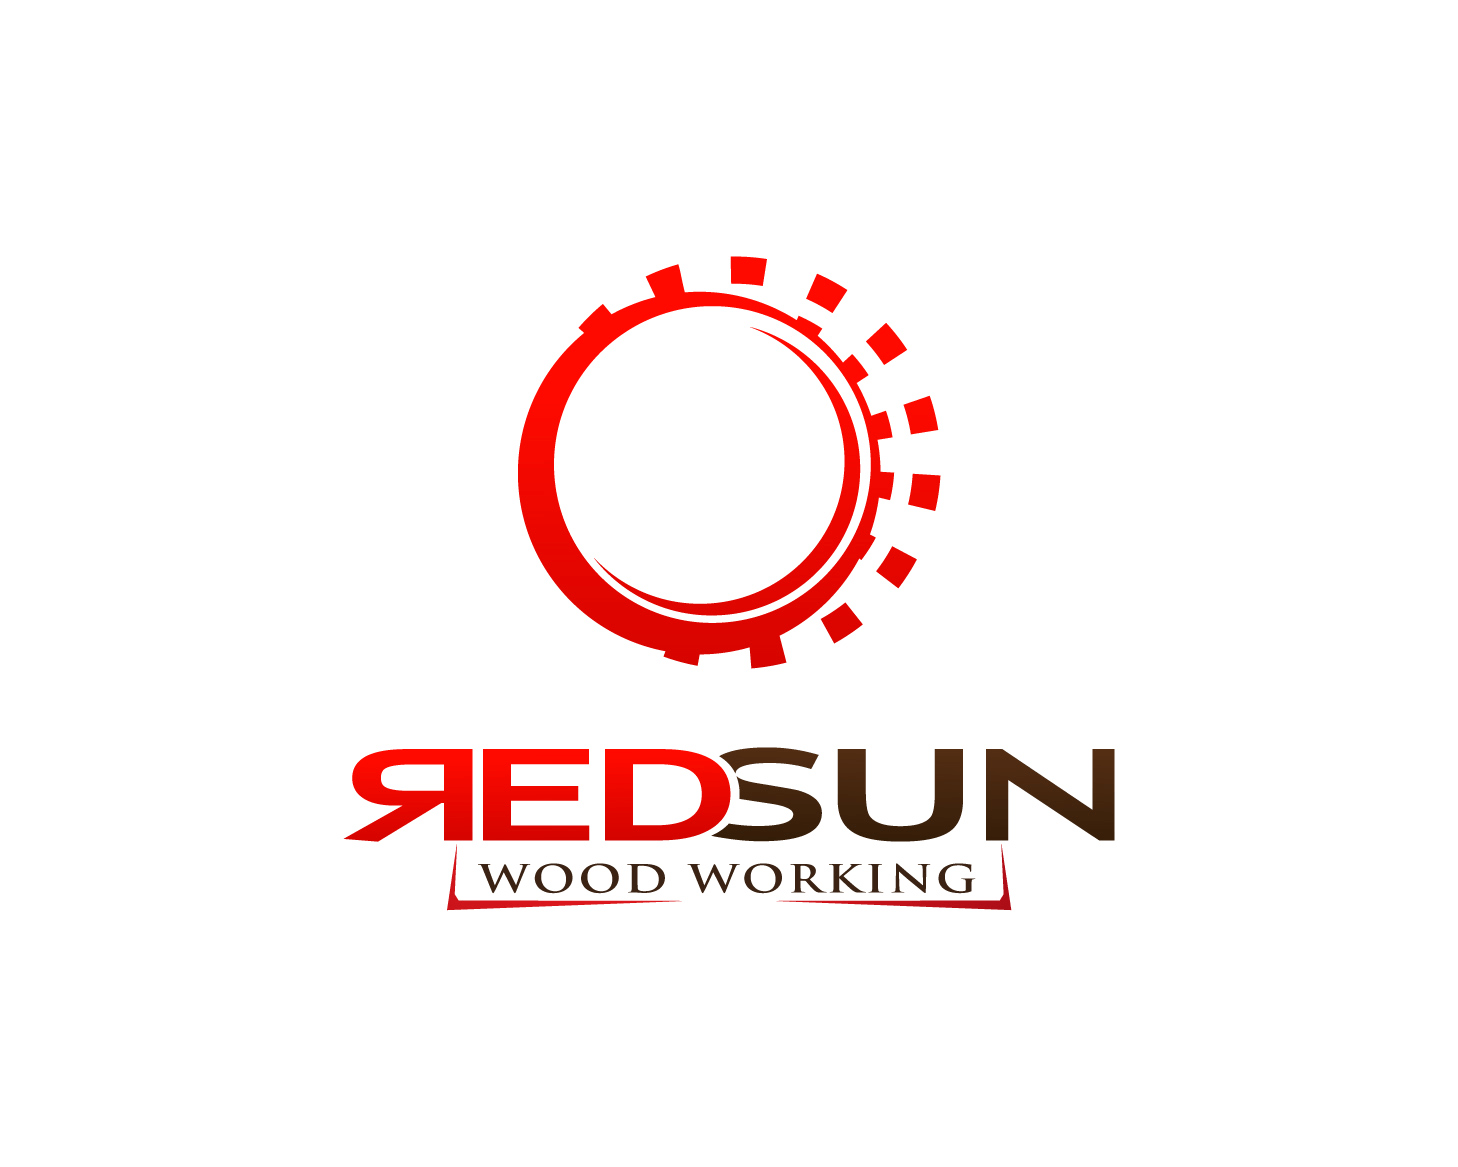 Red Sun Logo - Logo Design Contests » Red Sun Woodworking Logo Design » Design No ...